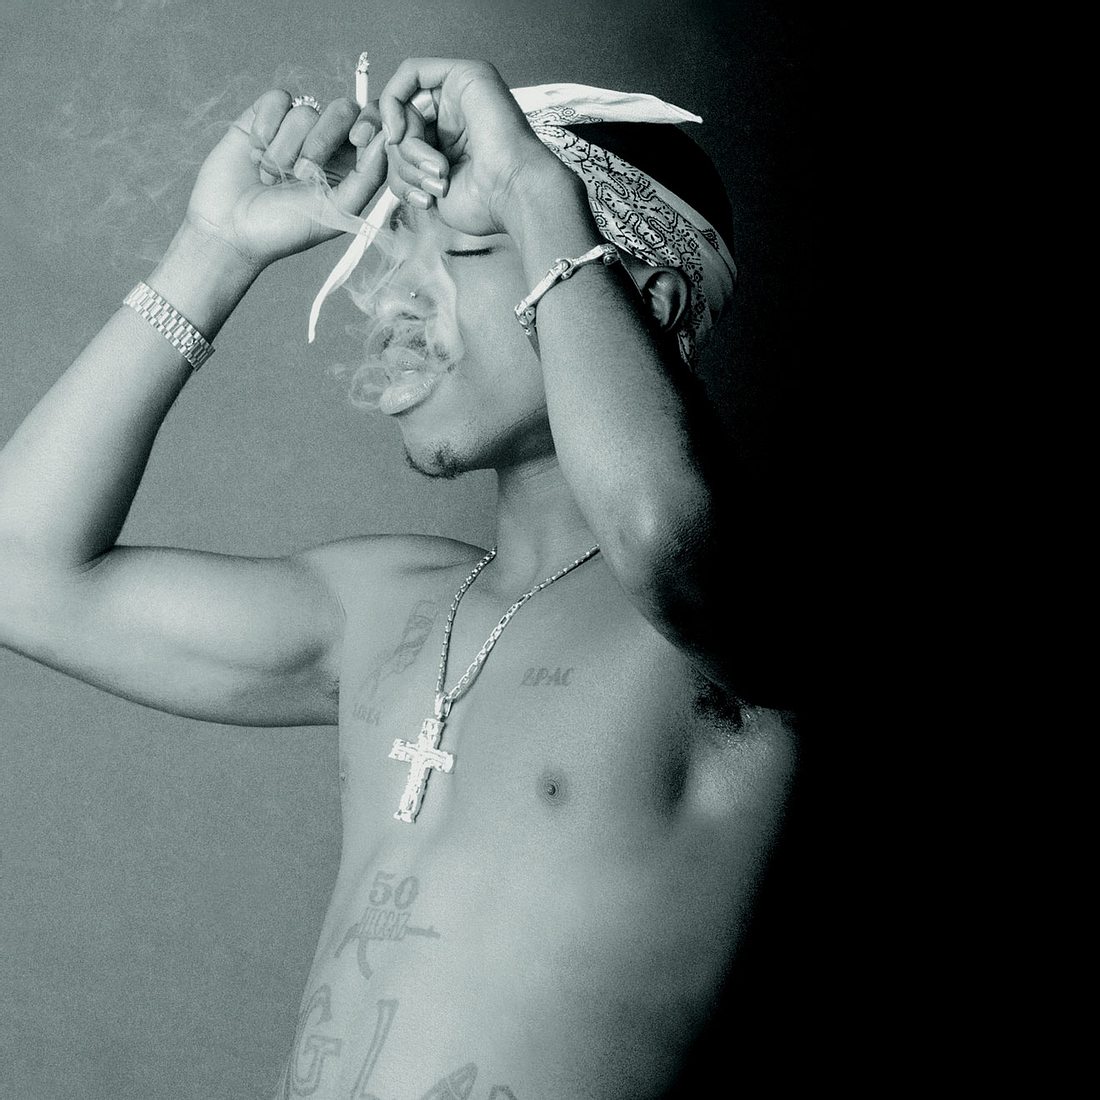 Kommt bald neue Musik des 1996 ermordeten Rappers Tupac Shakur?